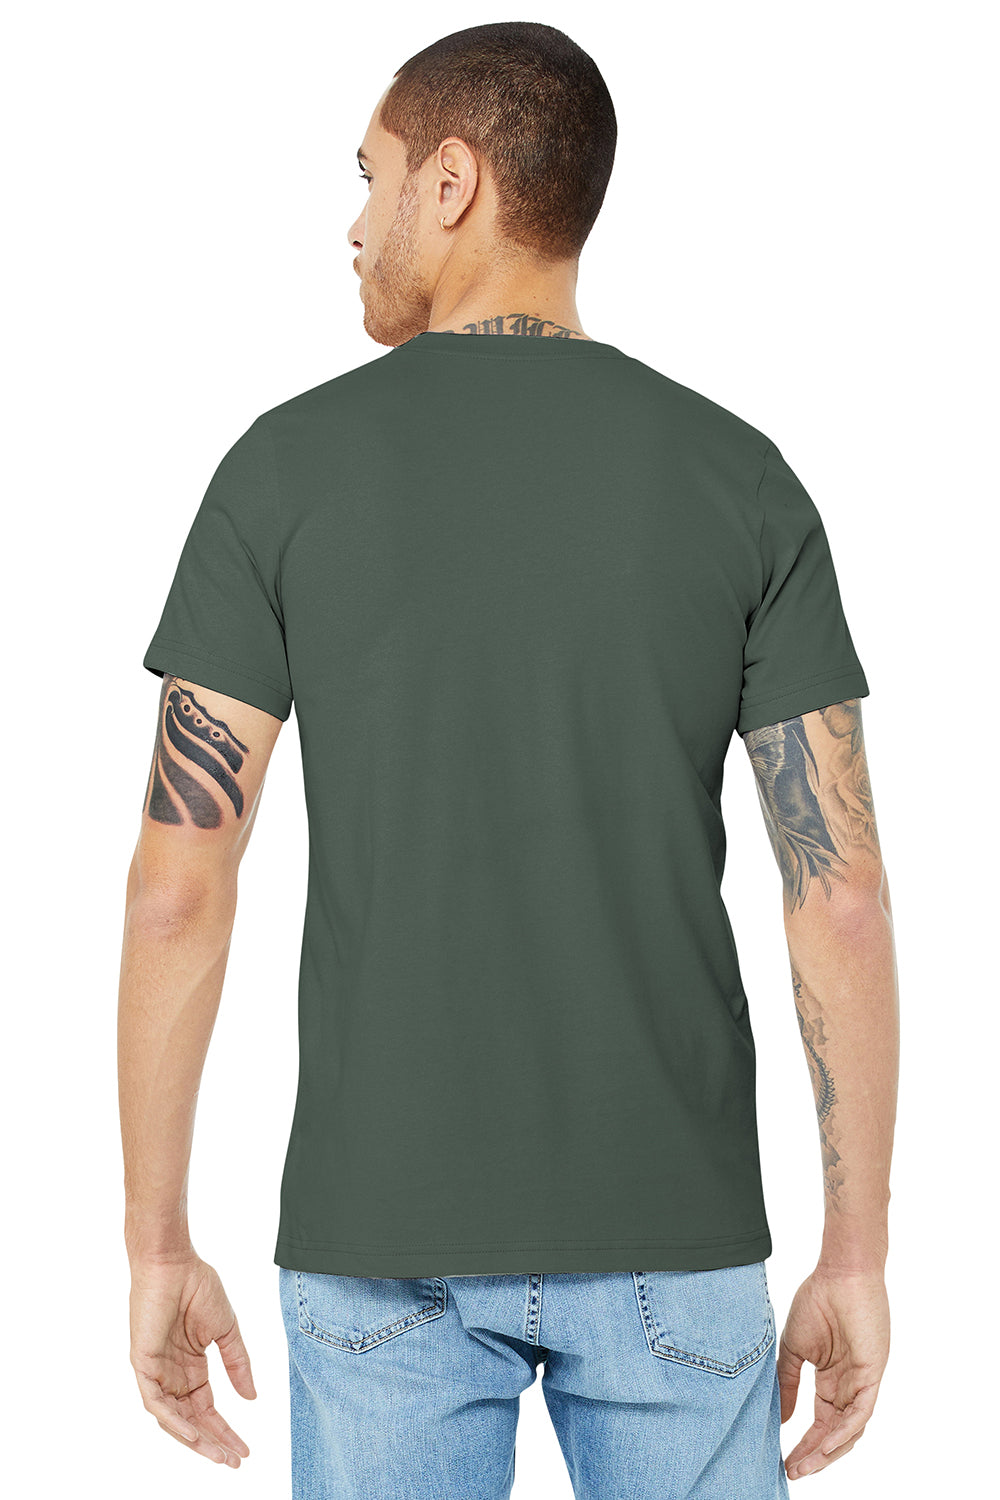 Bella + Canvas BC3001/3001C Mens Jersey Short Sleeve Crewneck T-Shirt Military Green Model Back